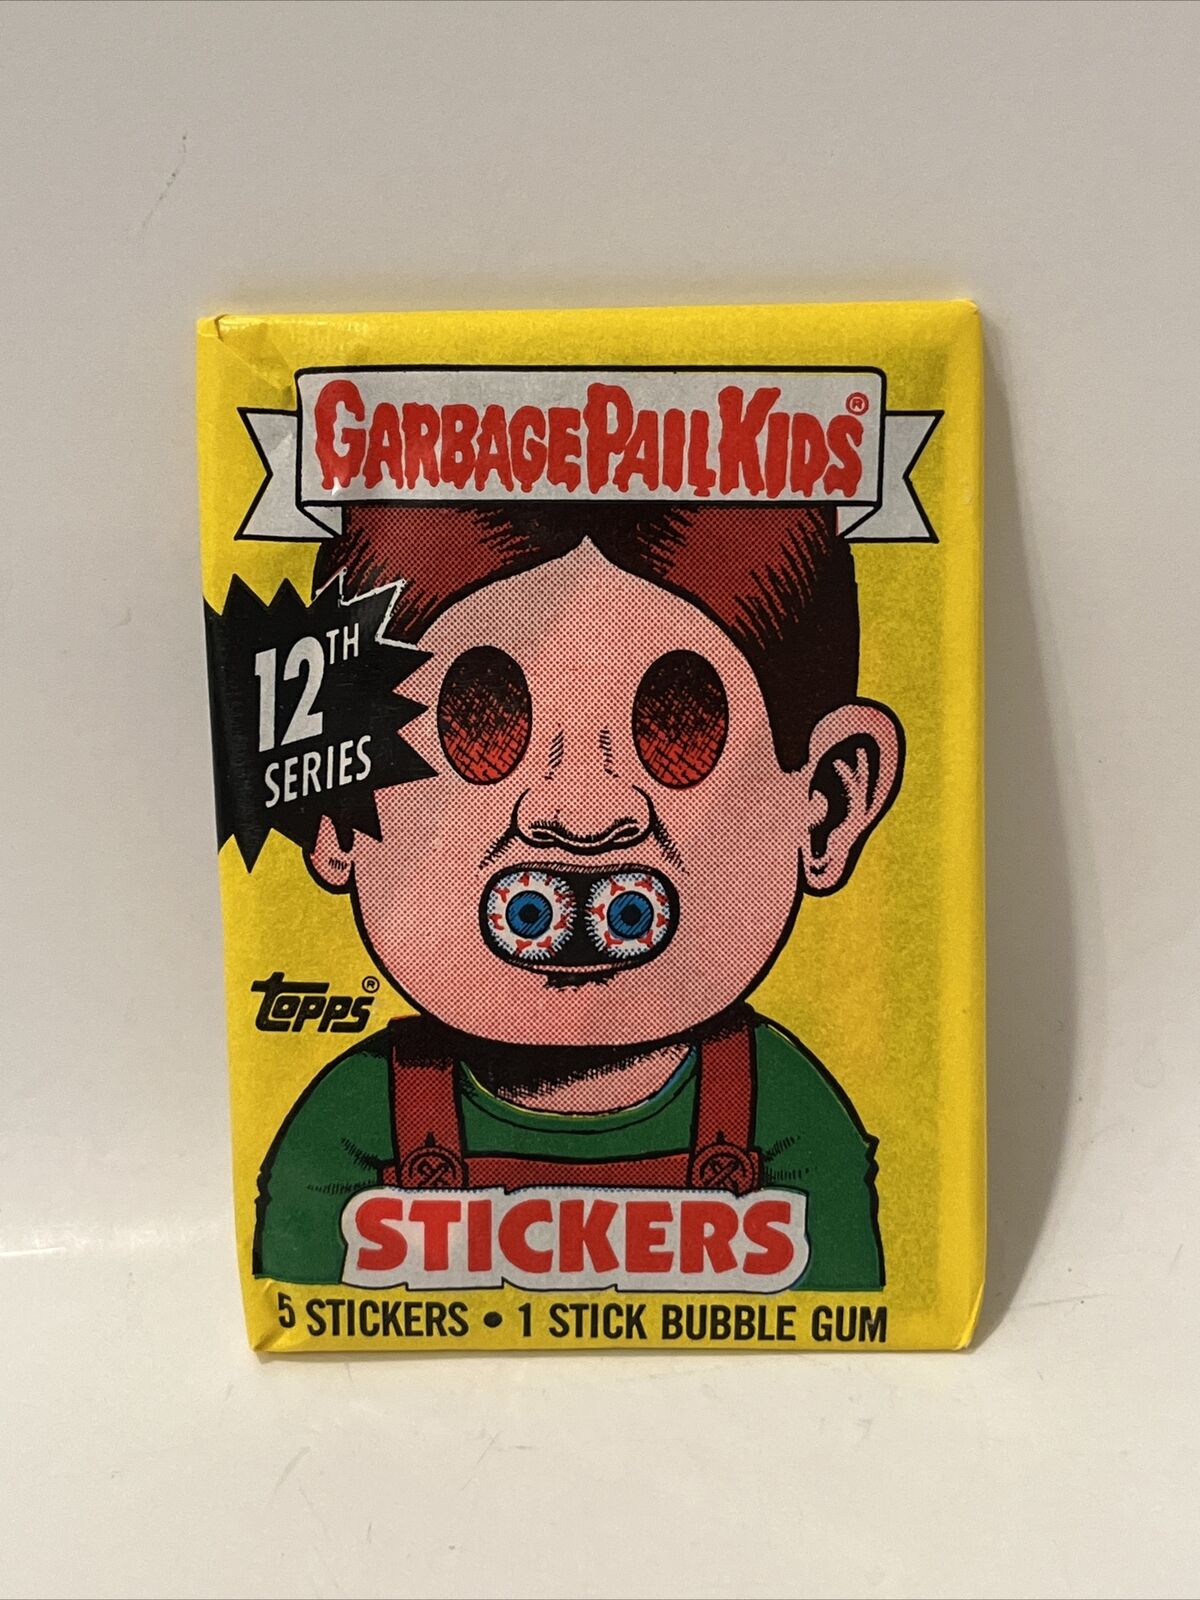 1988 Garbage Pail Kids Original Series 12 Wax Pack Factory Sealed Vintage Topps